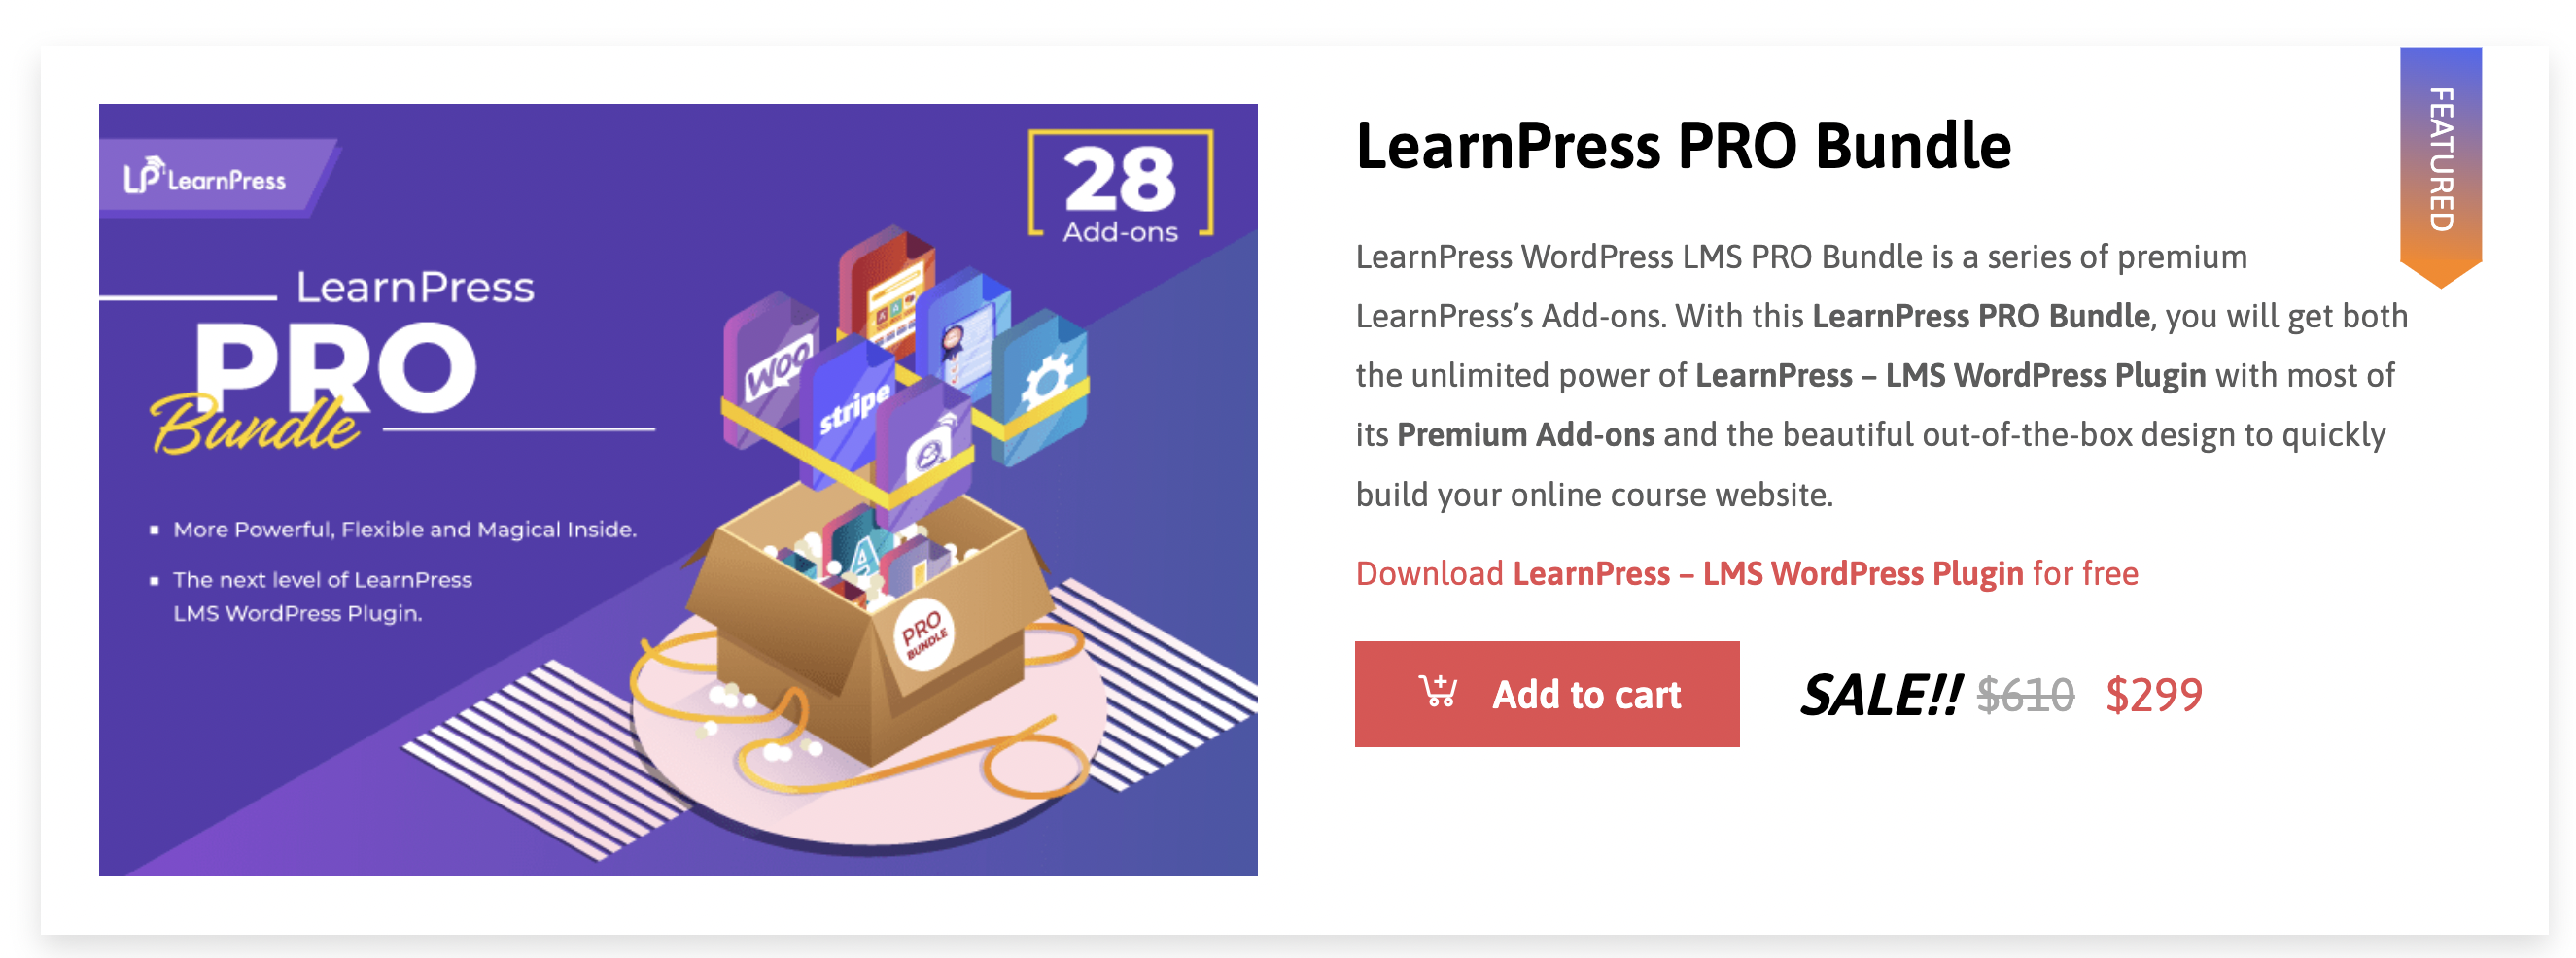 LearnPress prising